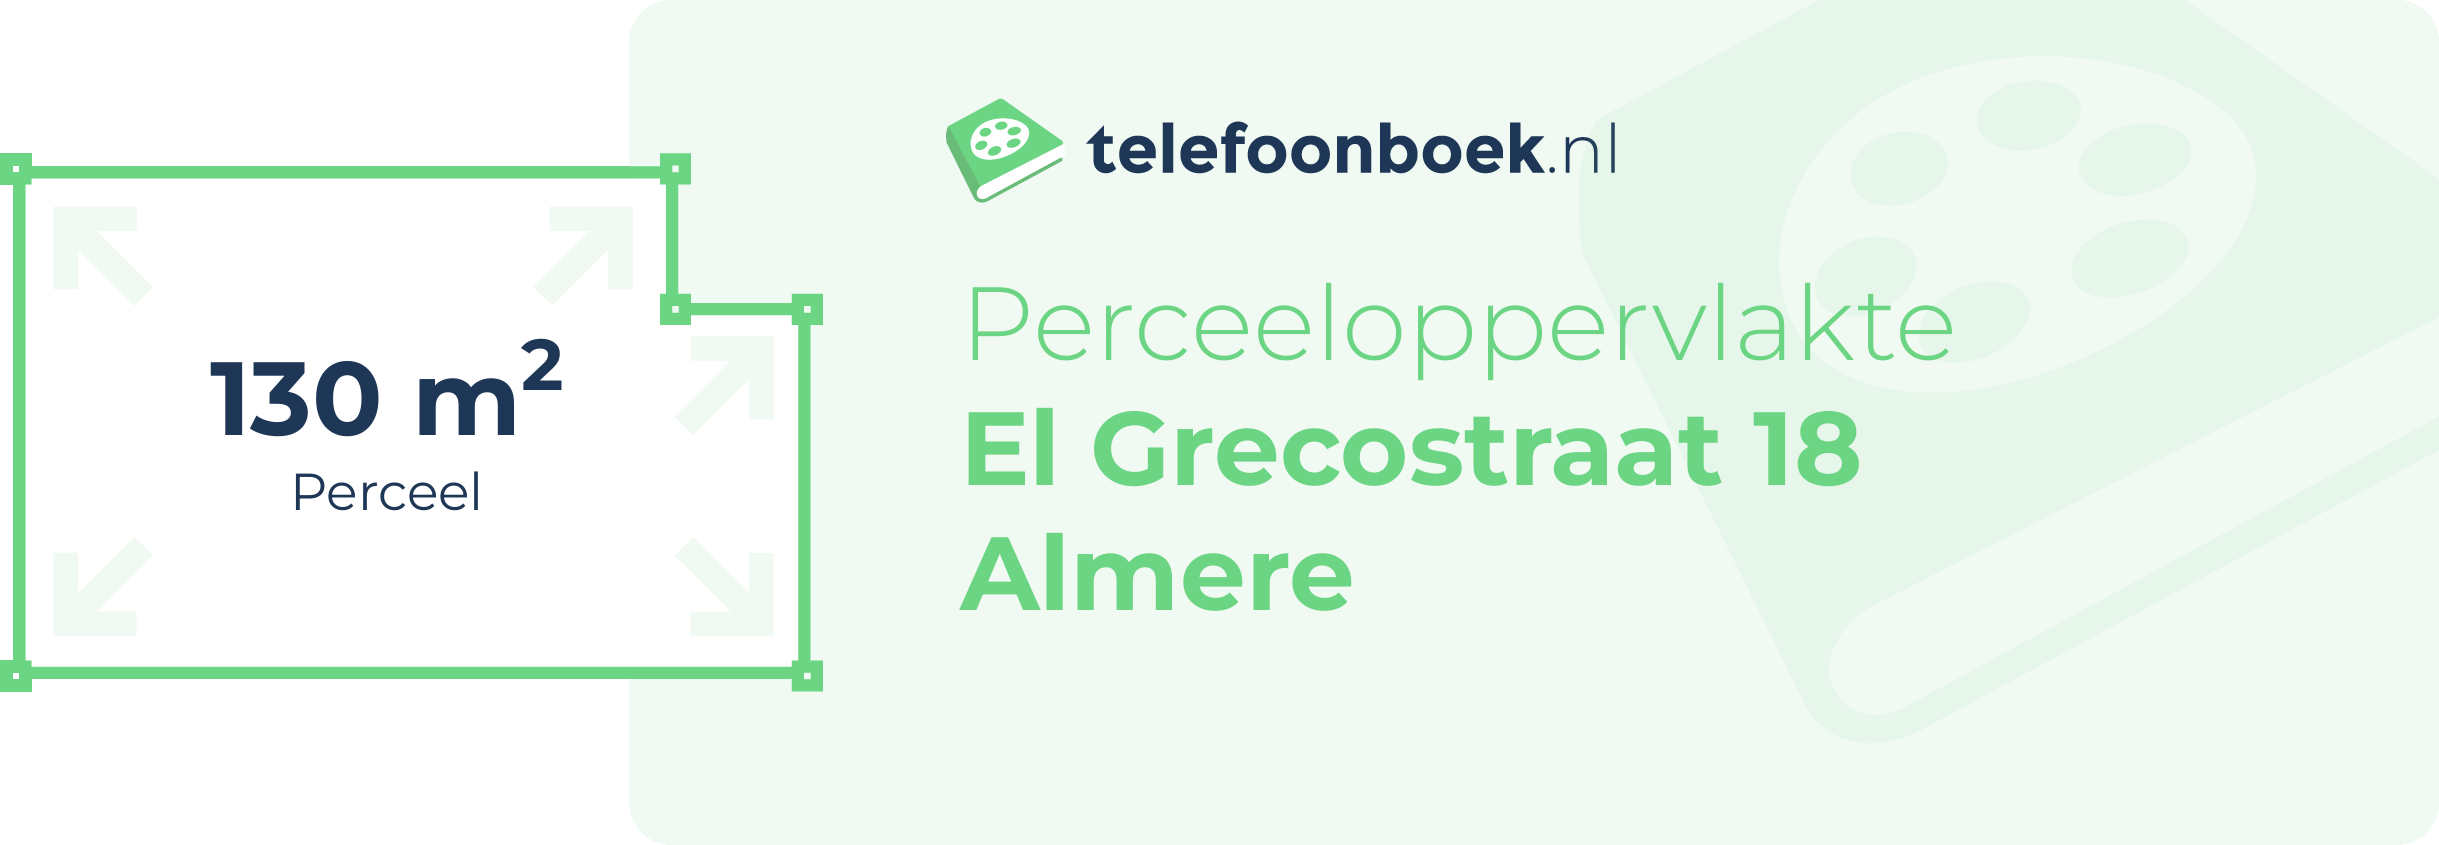 Perceeloppervlakte El Grecostraat 18 Almere